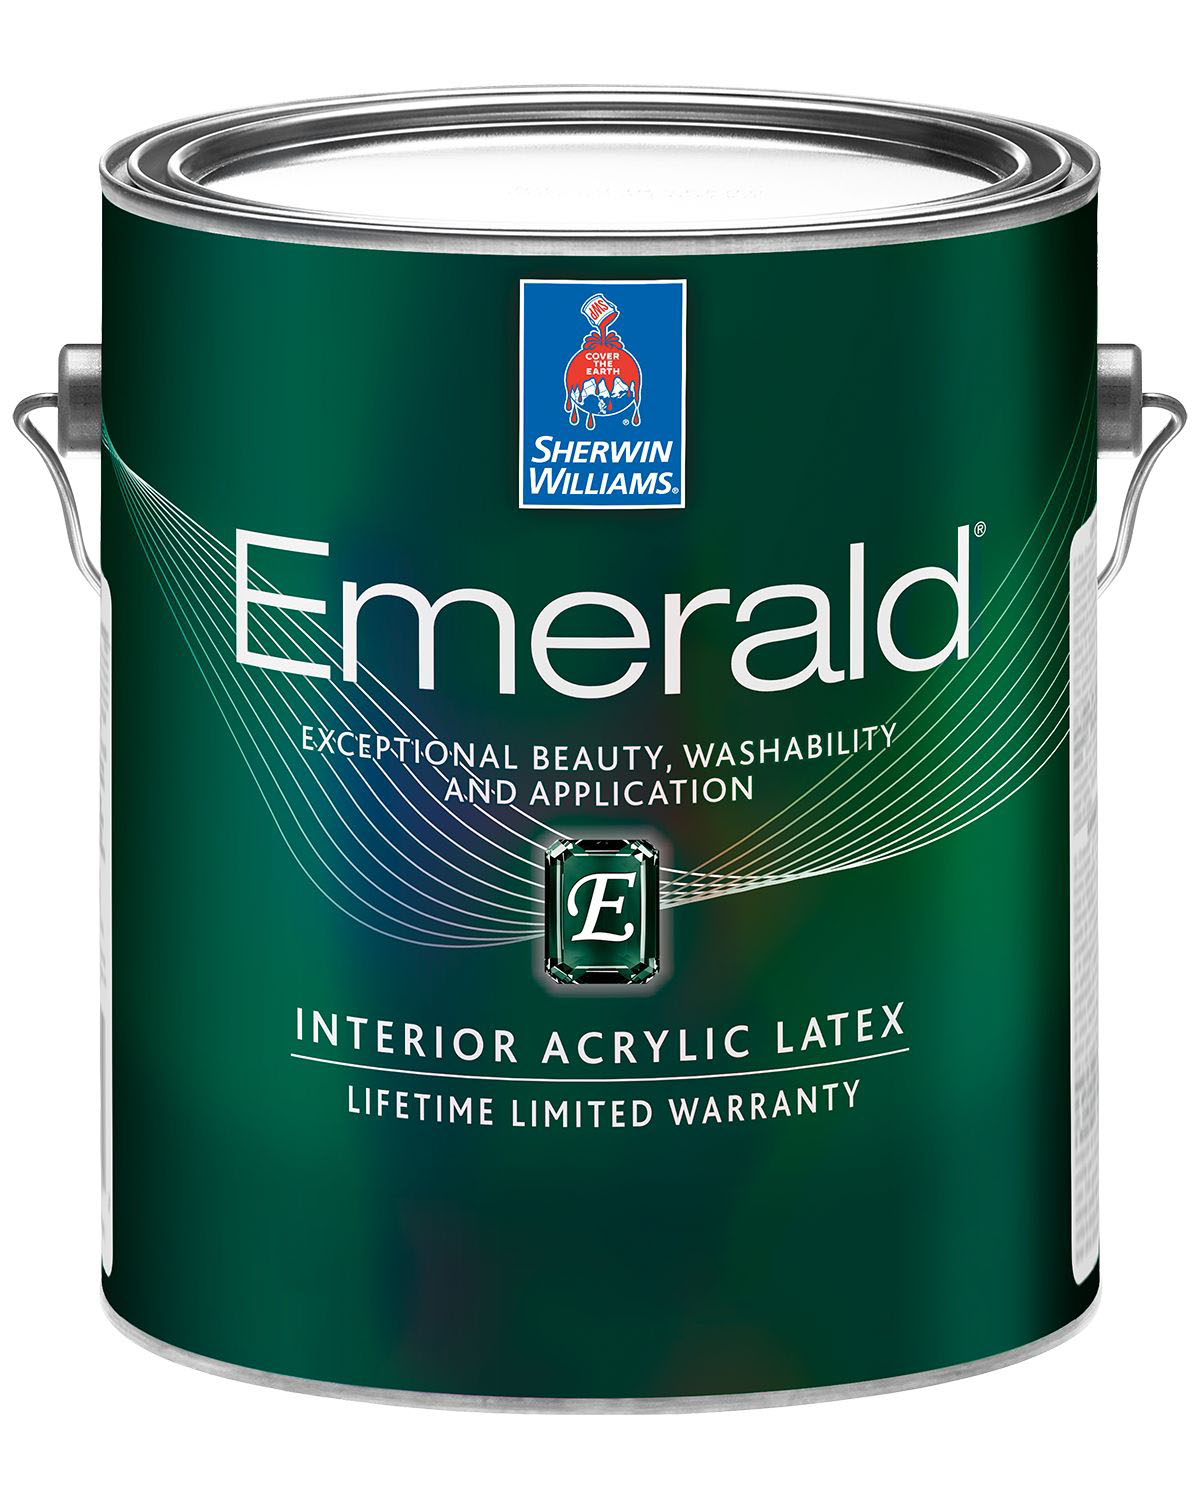 emerald-paint-sherwin-williams